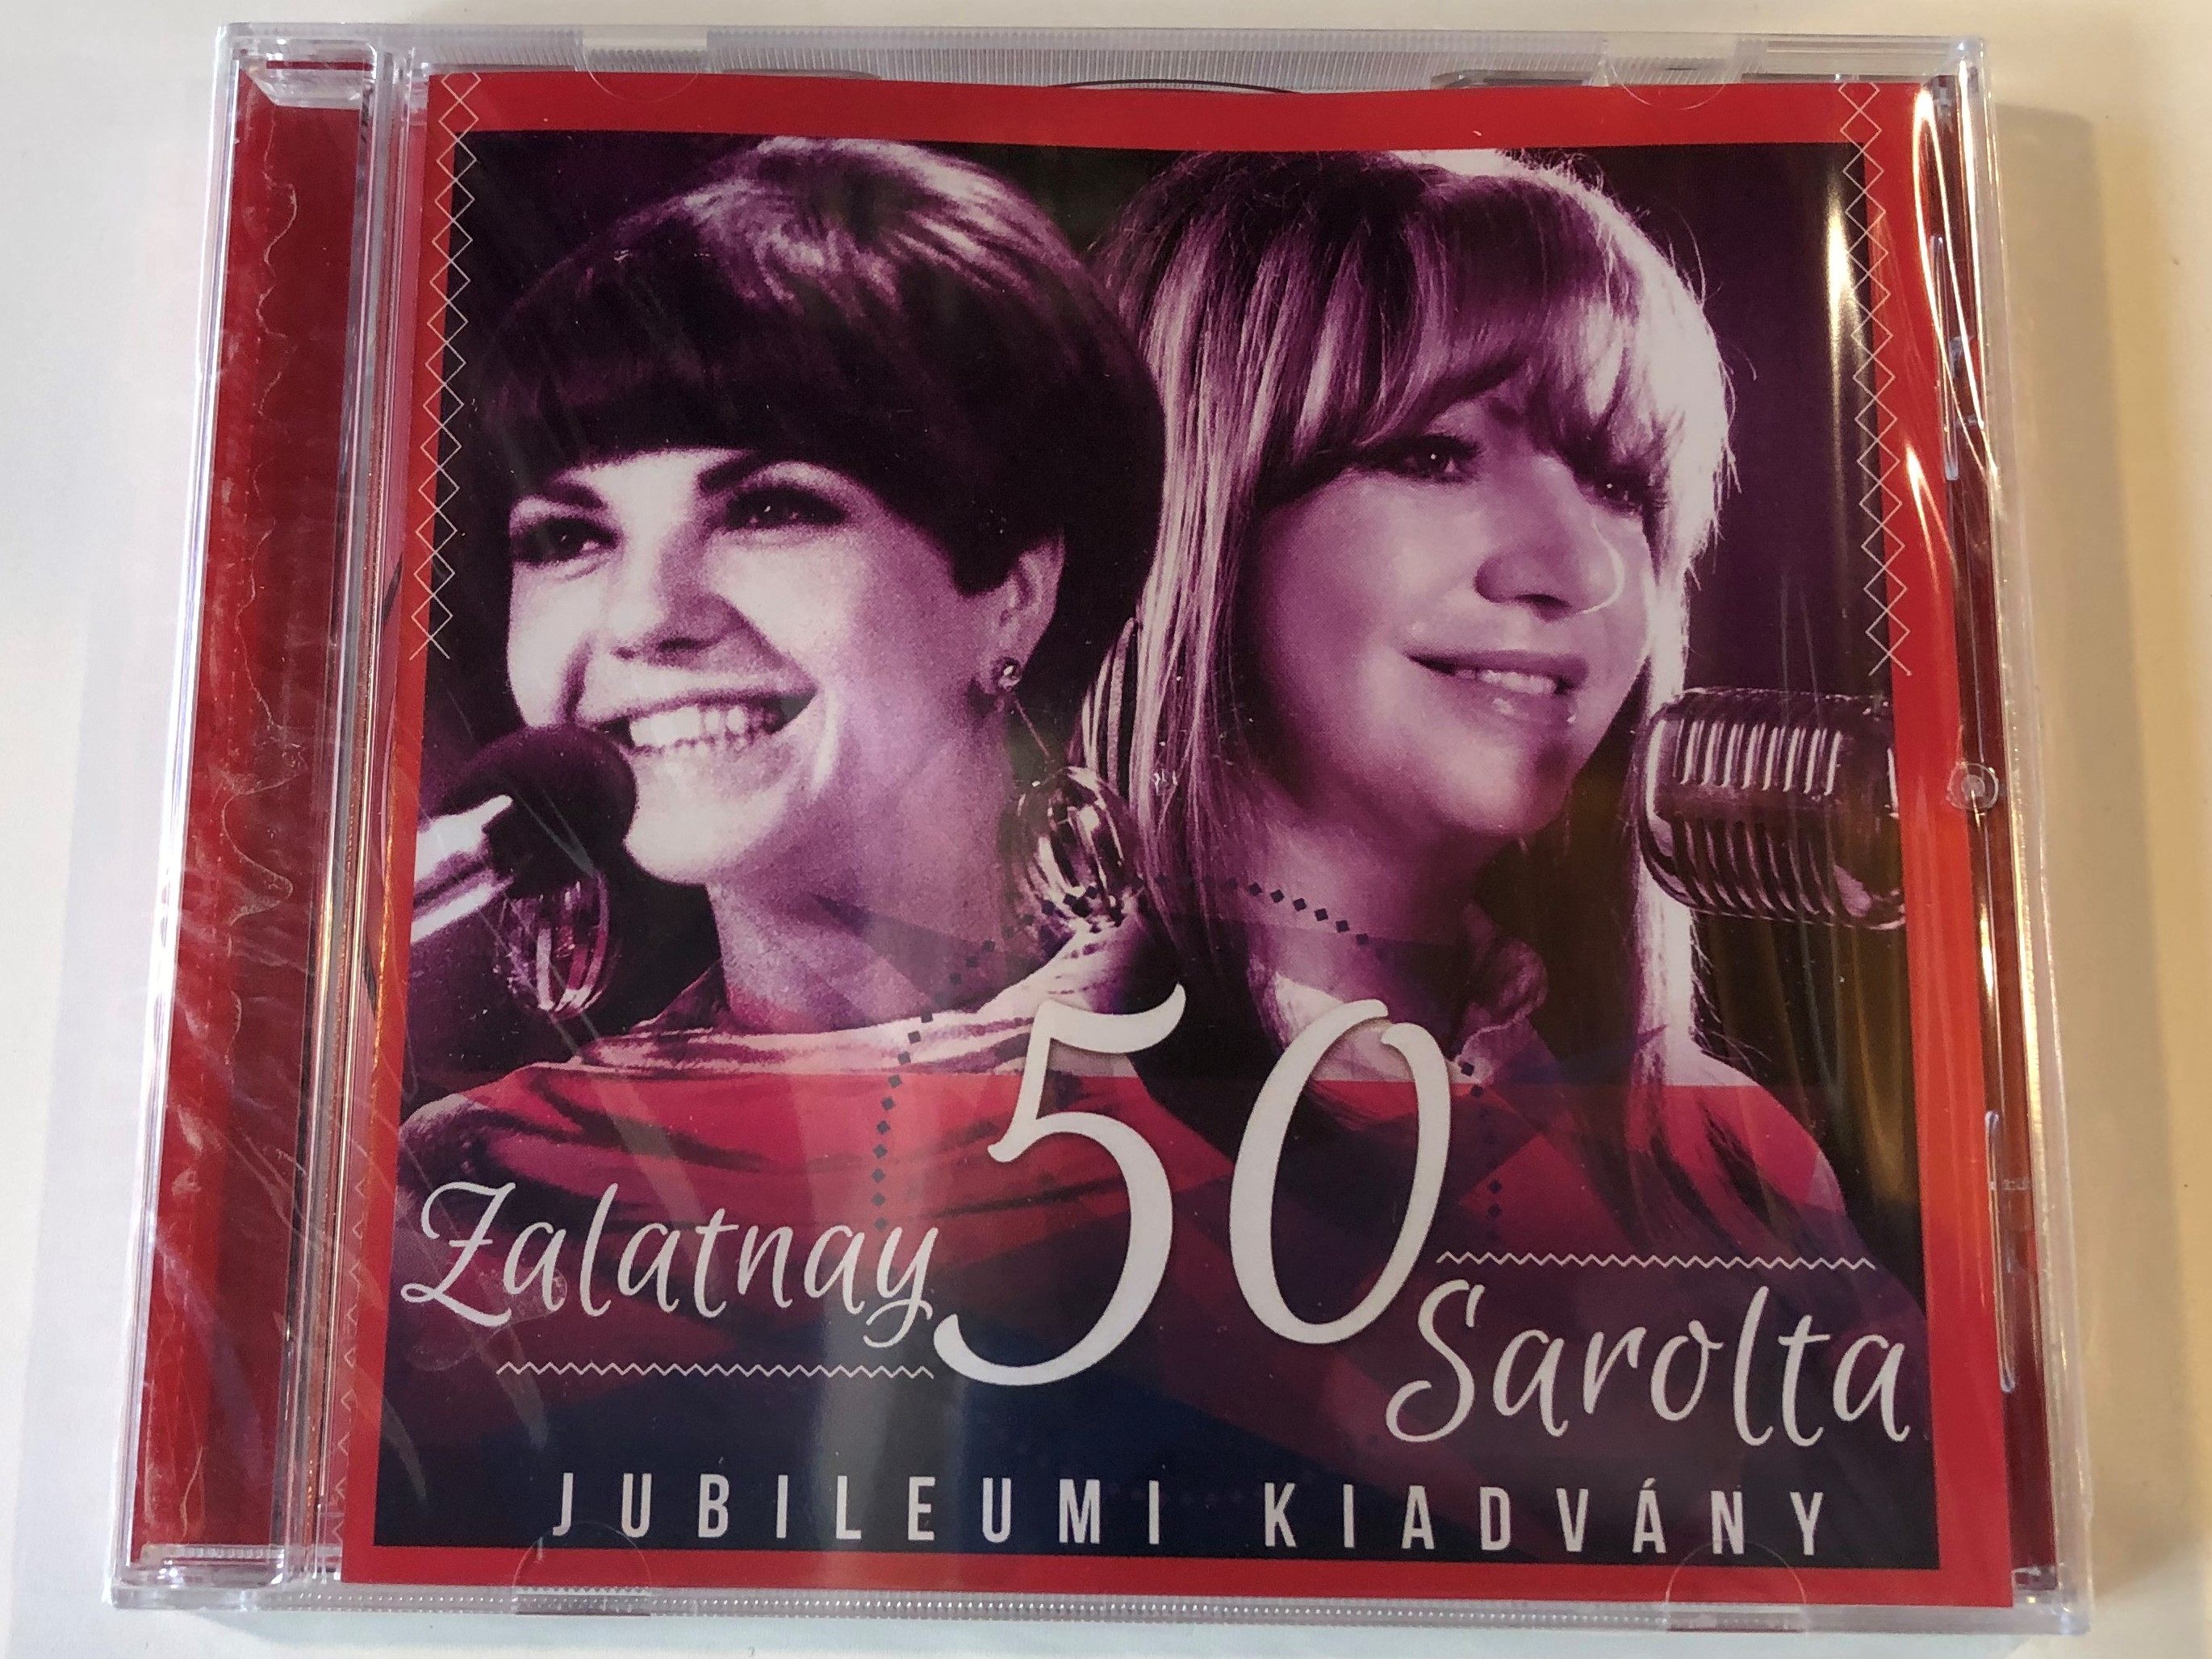 zalatnay-sarolta-50-jubileumi-kiadv-ny-trimedio-audio-cd-2015-tmcd007-1-.jpg